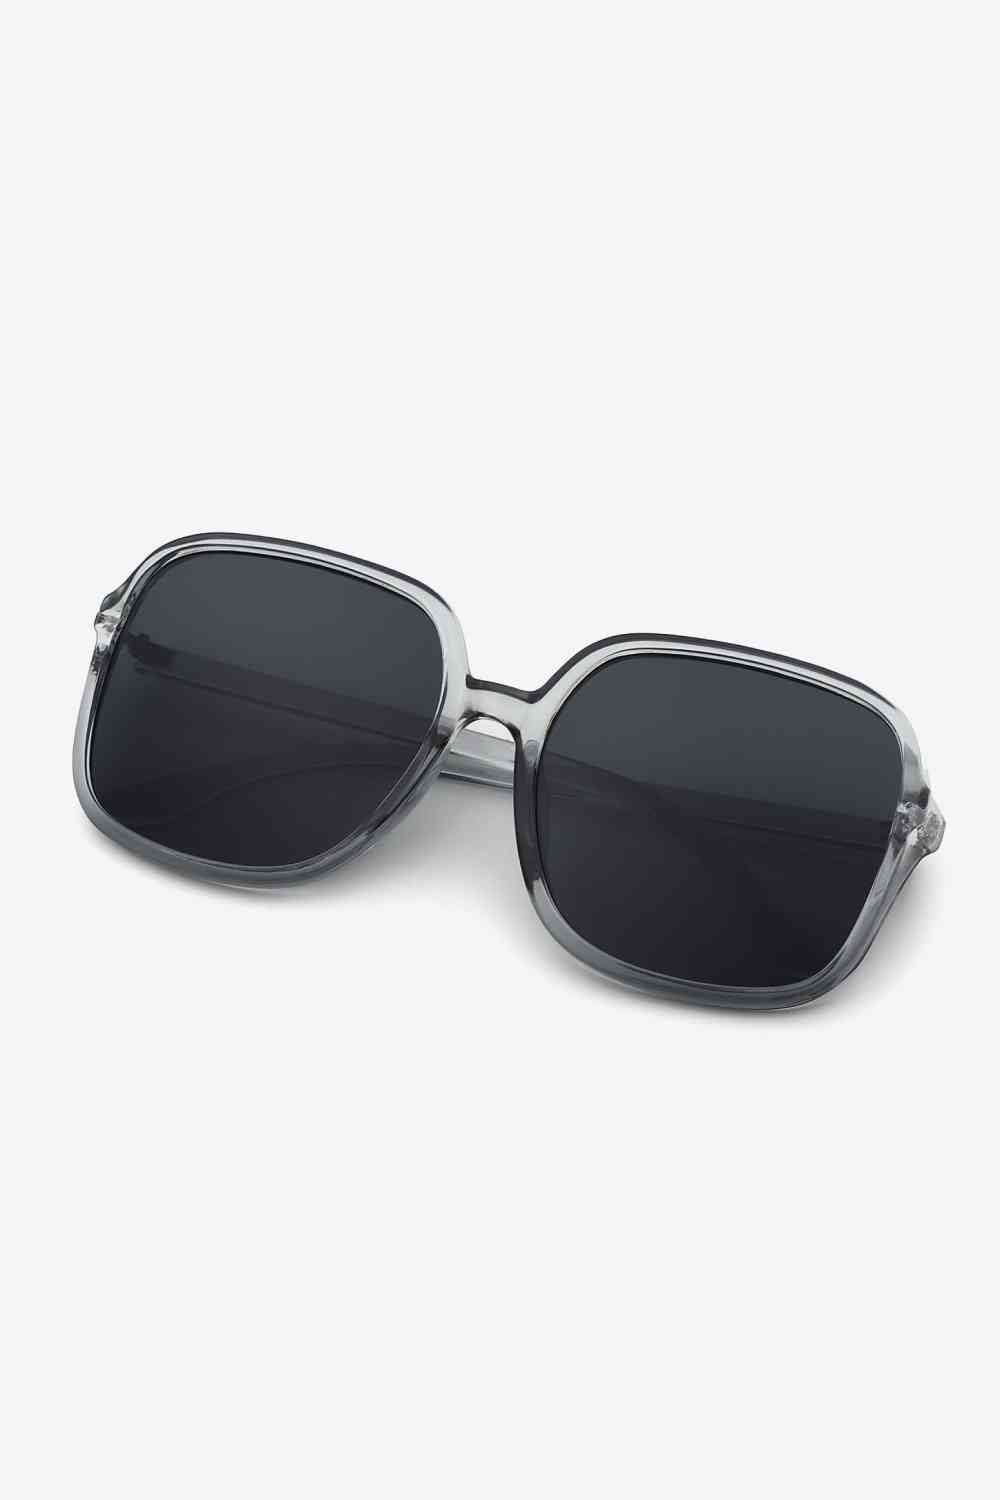 TEEK - Simply Square Style Sunglasses EYEGLASSES TEEK Trend Black  